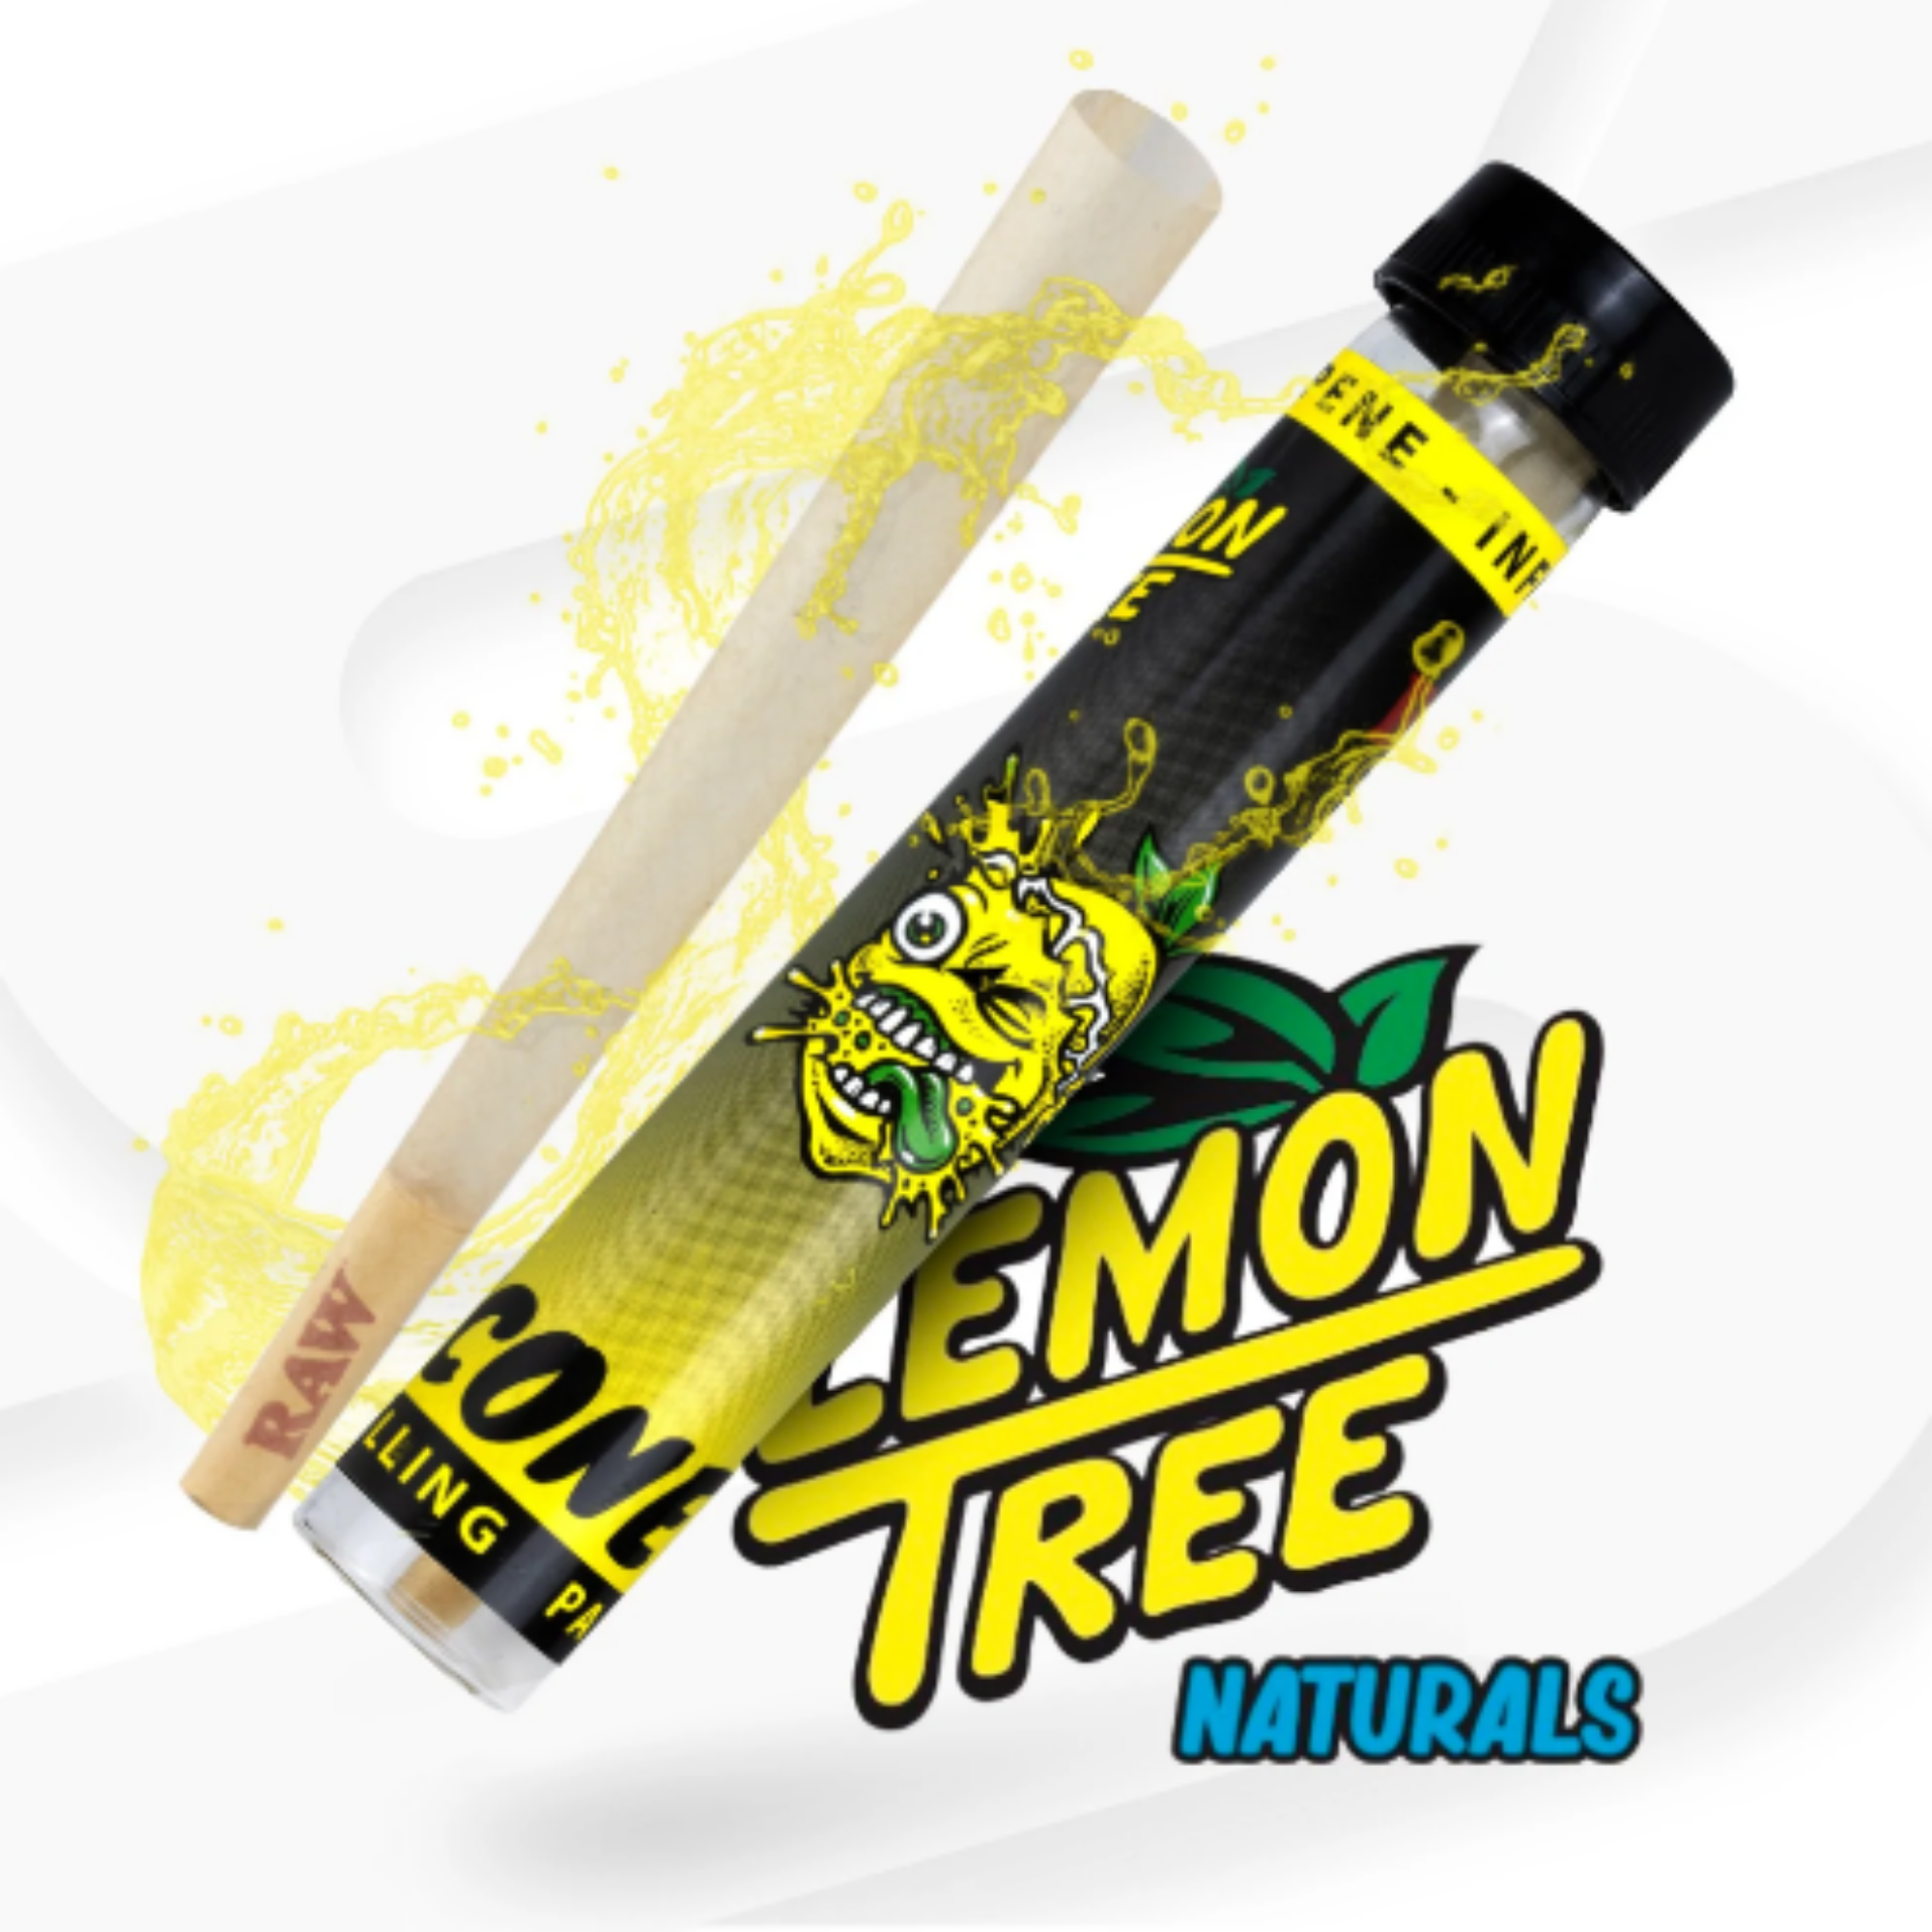 raw lemon tree cones review| matriarch.la